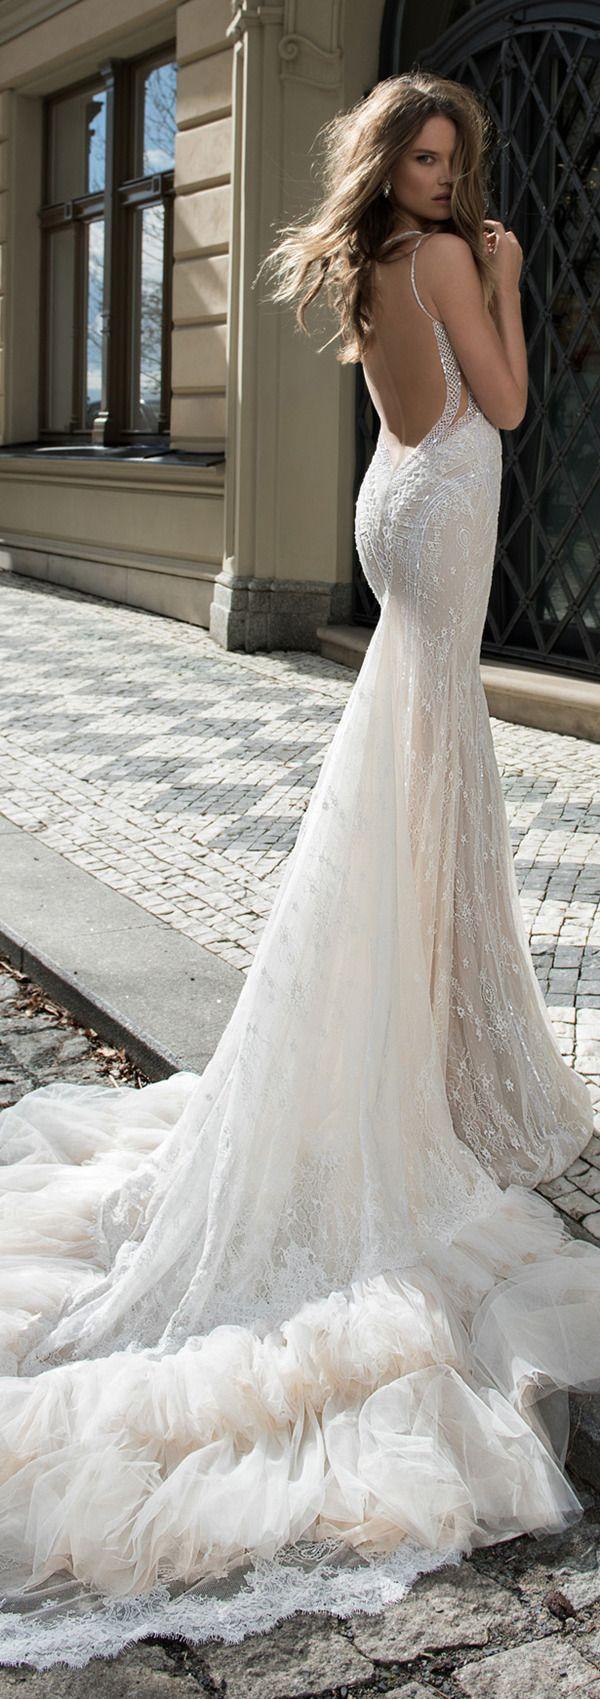 Wedding - Berta Bridal Wedding Dresses For Fall 2015